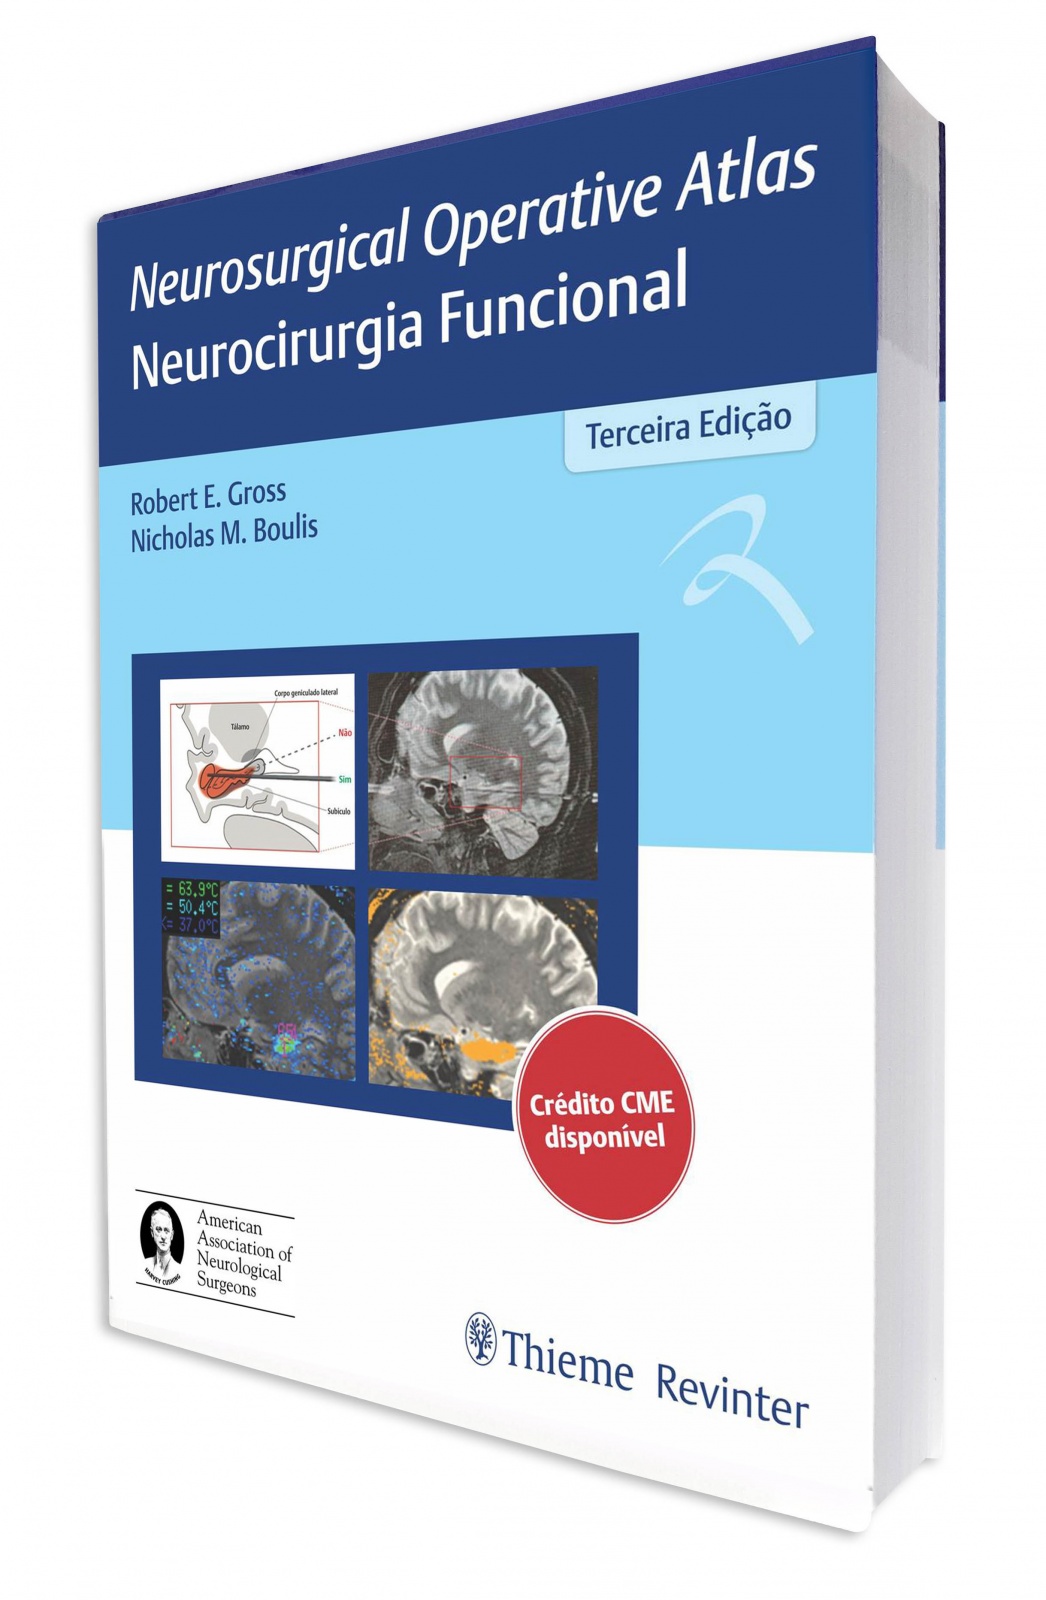 Neurosurgical Operative Atlas Neurocirurgia Funcional